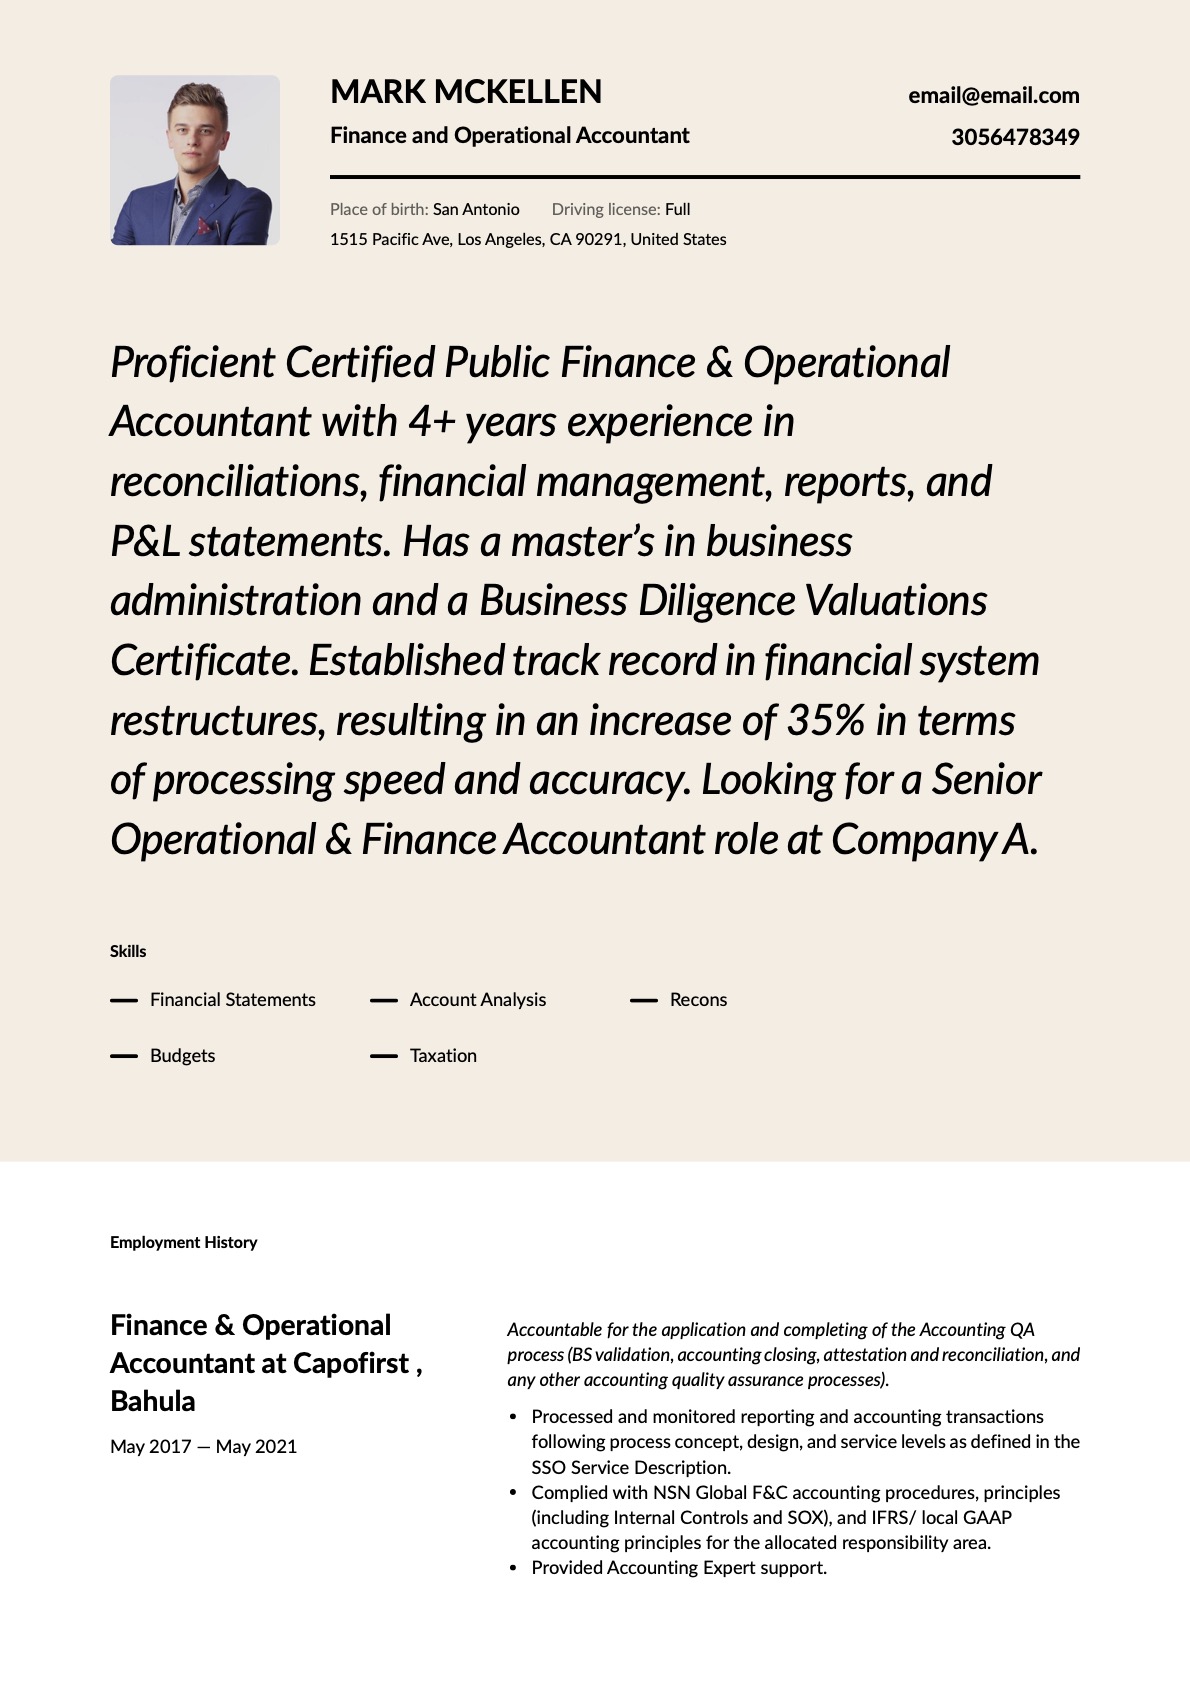 Finance & Operational Accountant Resume